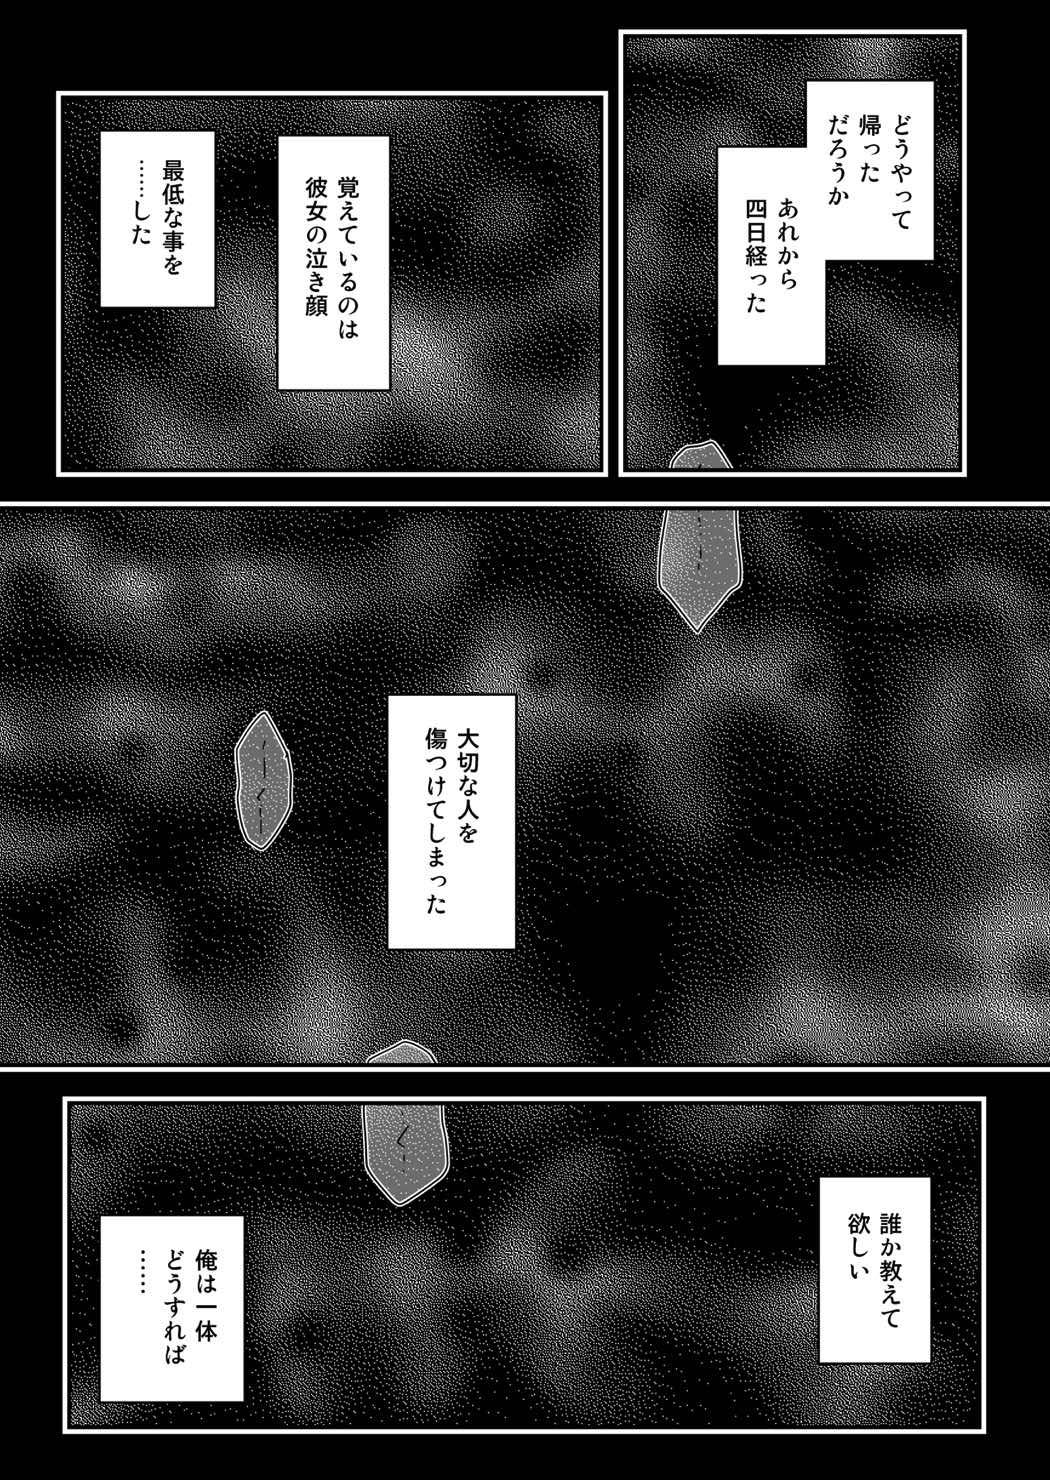 Wank ＊＊＊＊＊＊＊＊＊! 2 - Seitokai yakuindomo Public Sex - Page 2